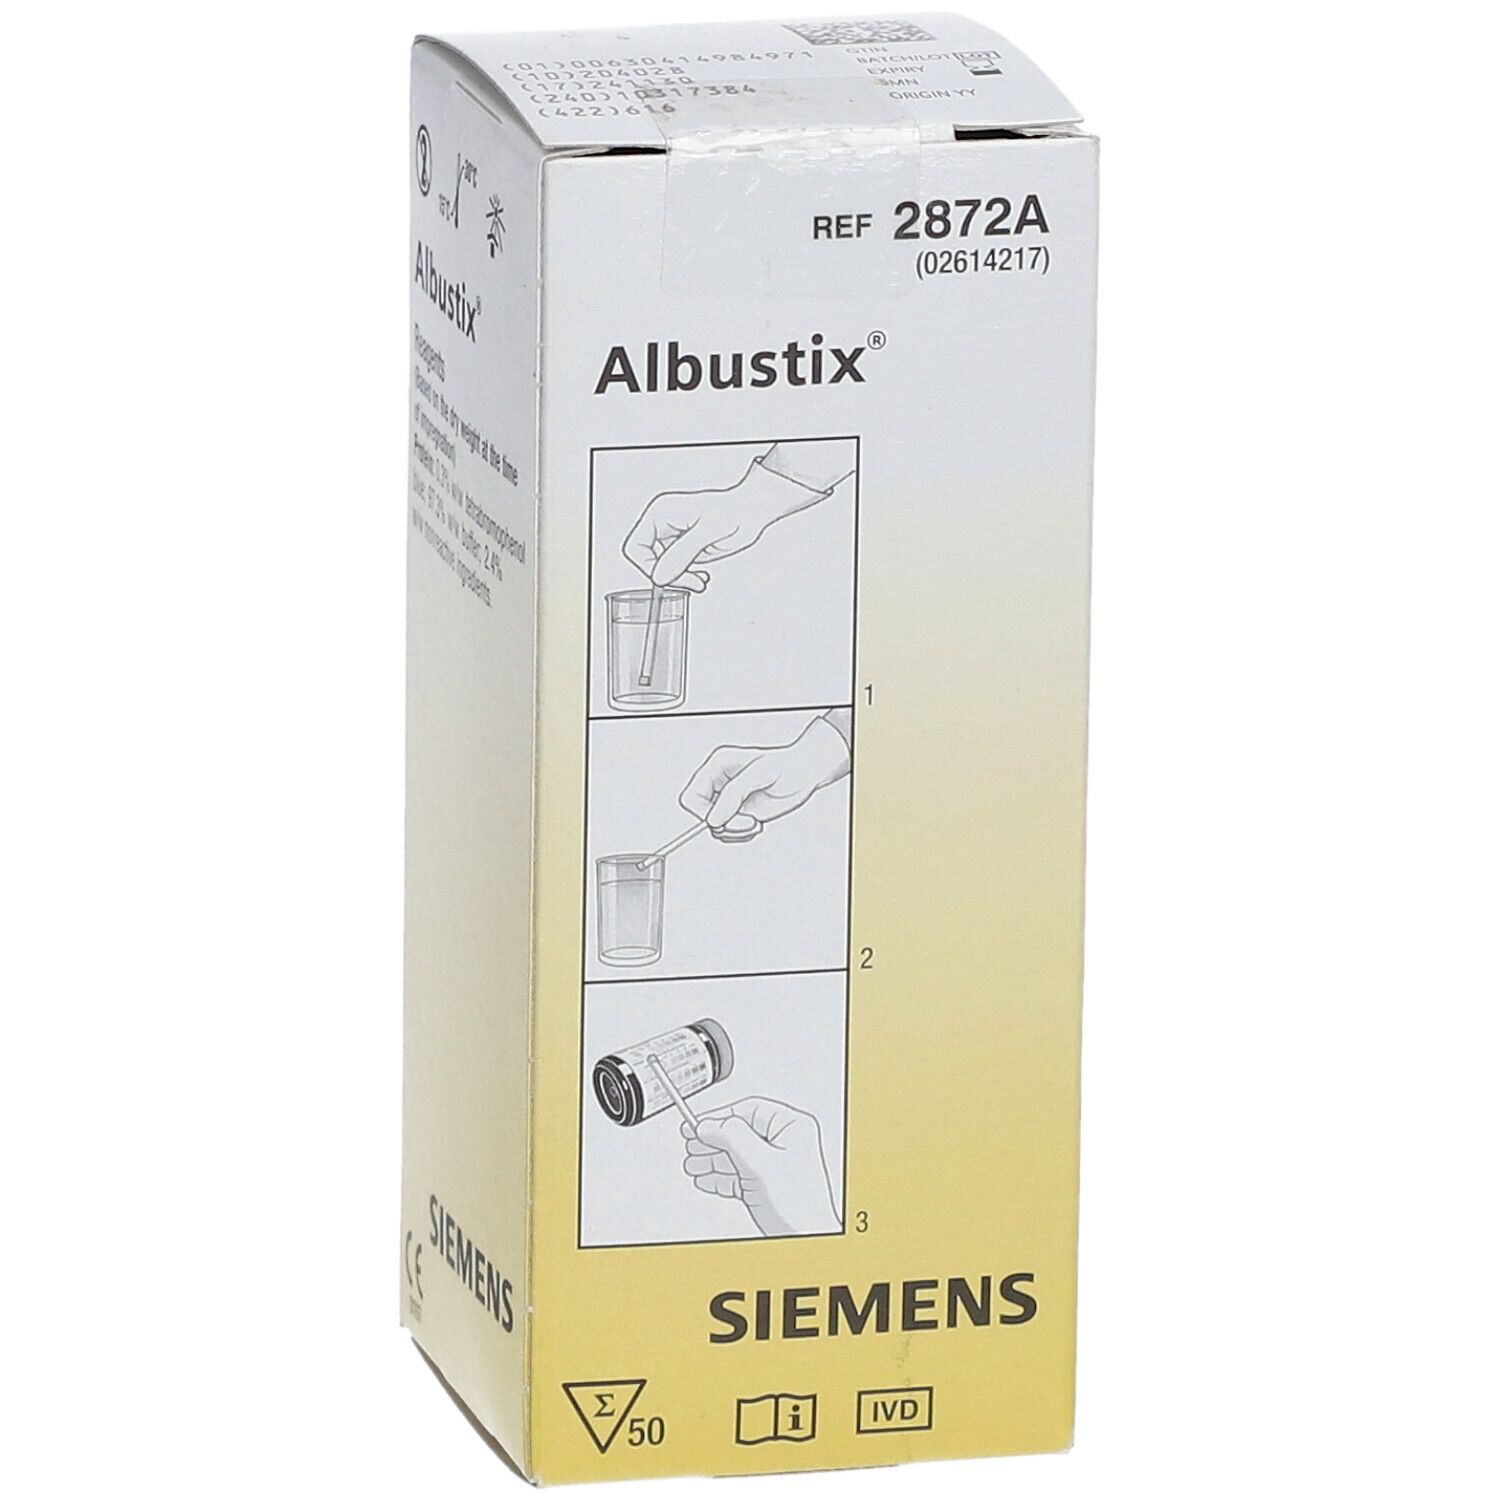 Siemens ALBUSTIX® Bandelettes réactives